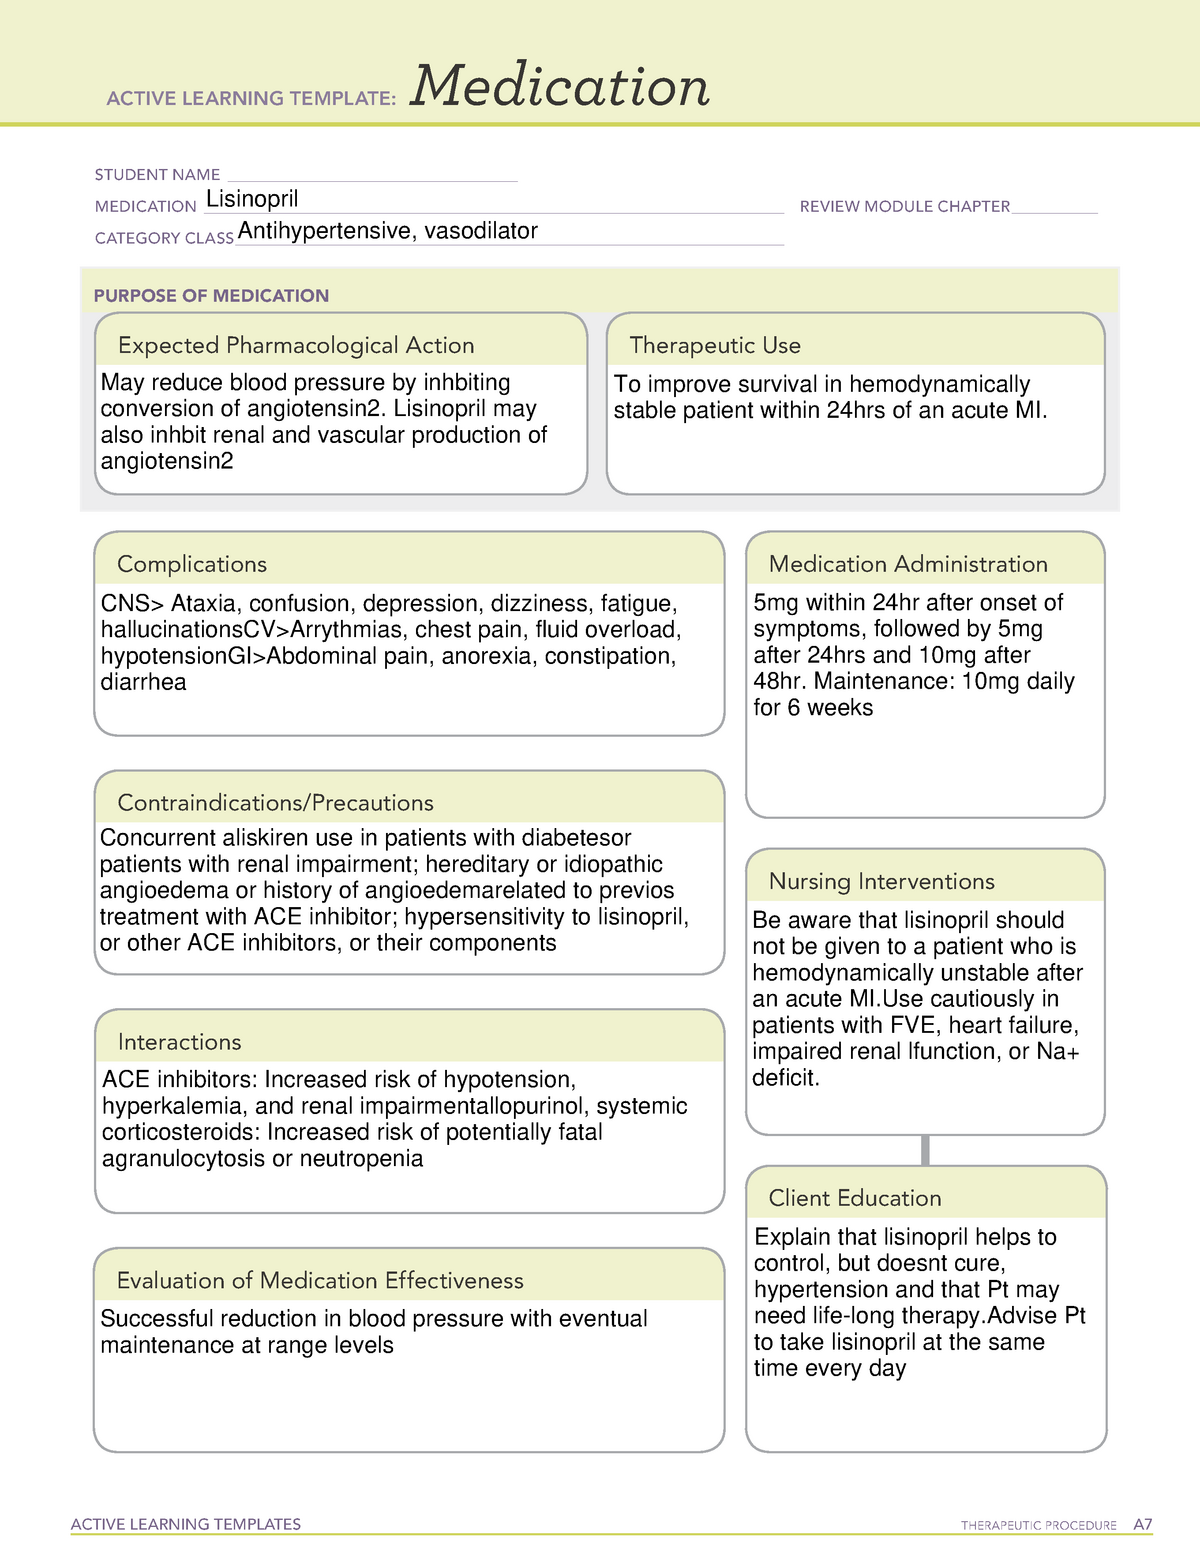 ALTmedicationlisinopril medication template and report ACTIVE